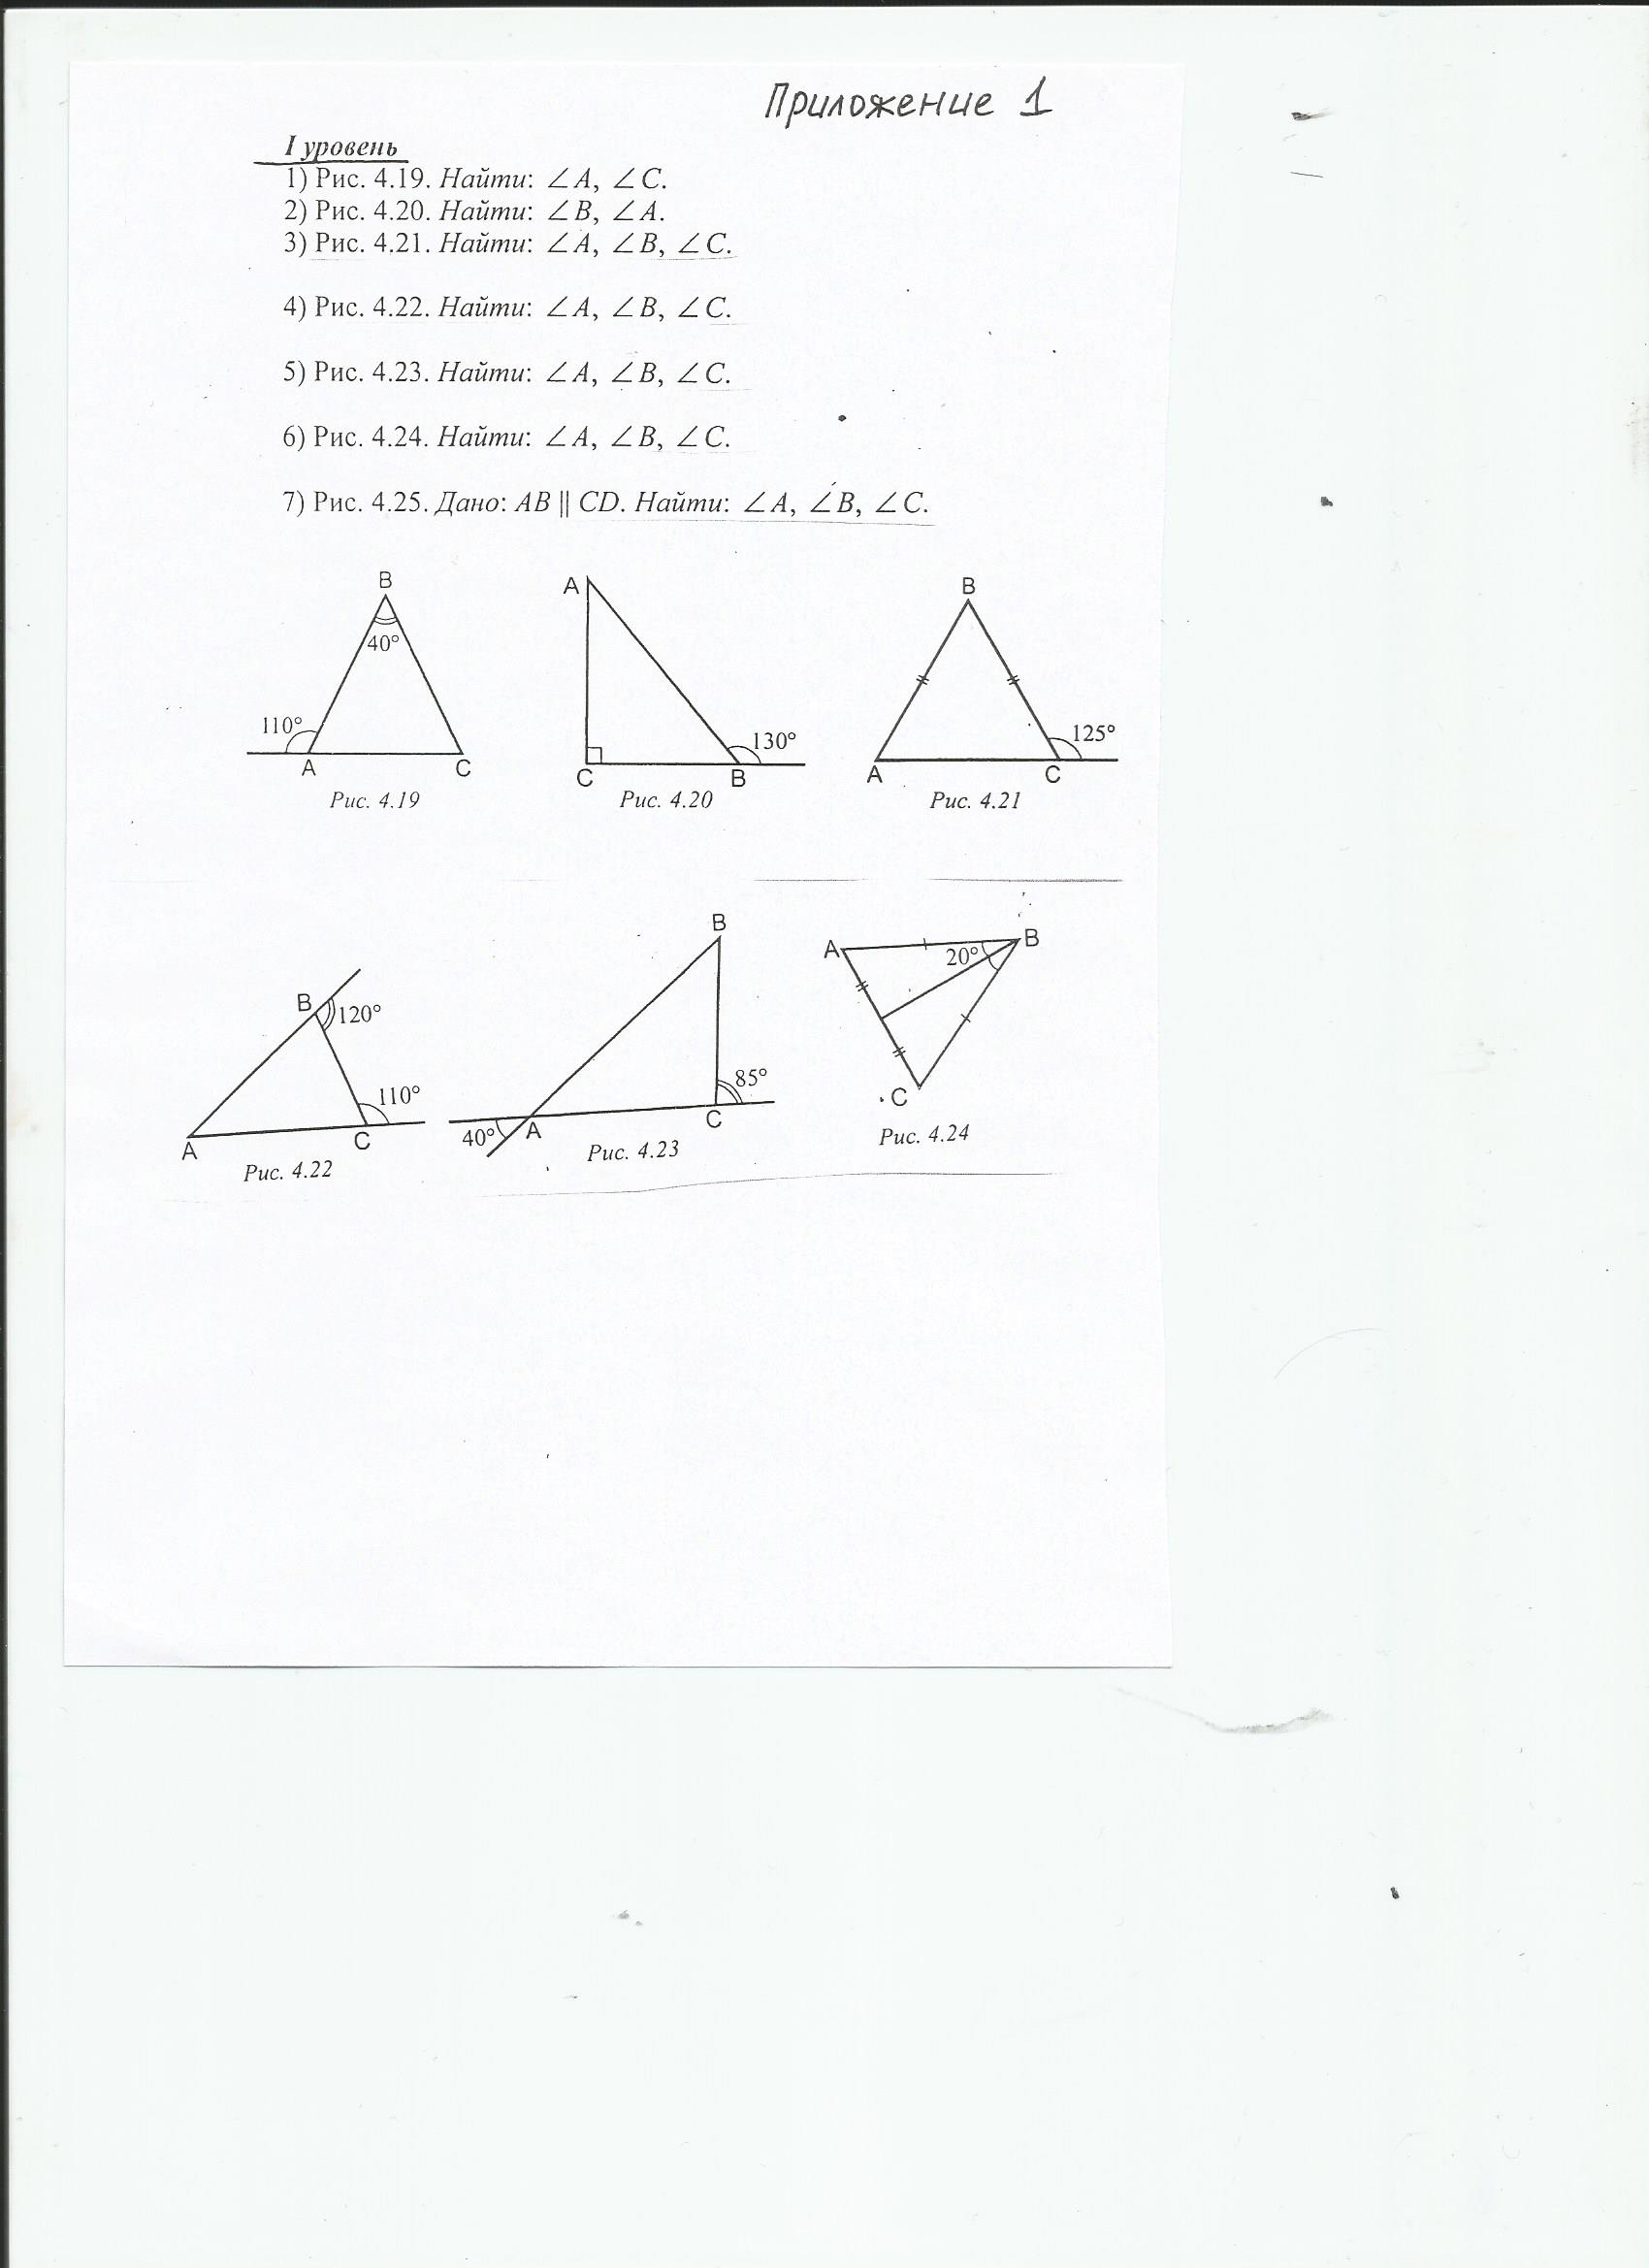 Конспект урока по геометрии. Решение задач по теме: Сумма углов треугольника (7 класс).